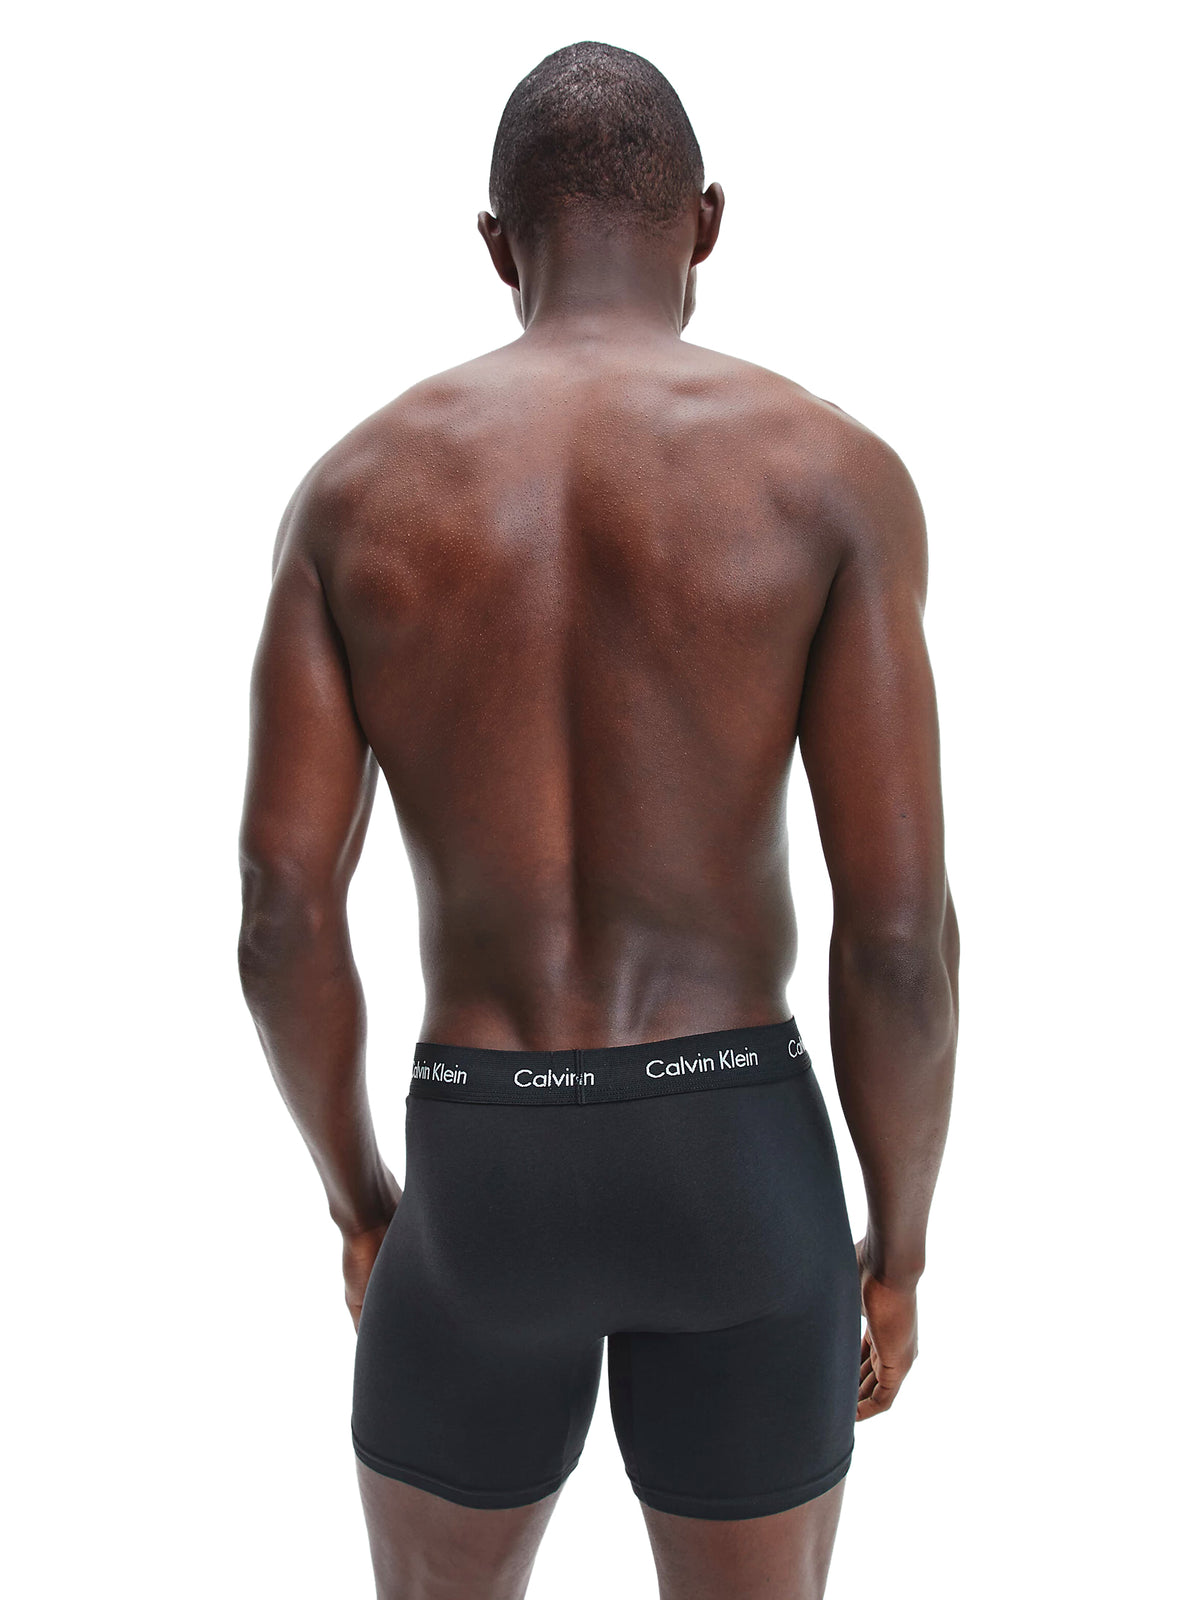 Calvin Klein Mens Boxer Briefs - Classic Fit (3-Pack), 03, Nb1770A, Black/Black/Black